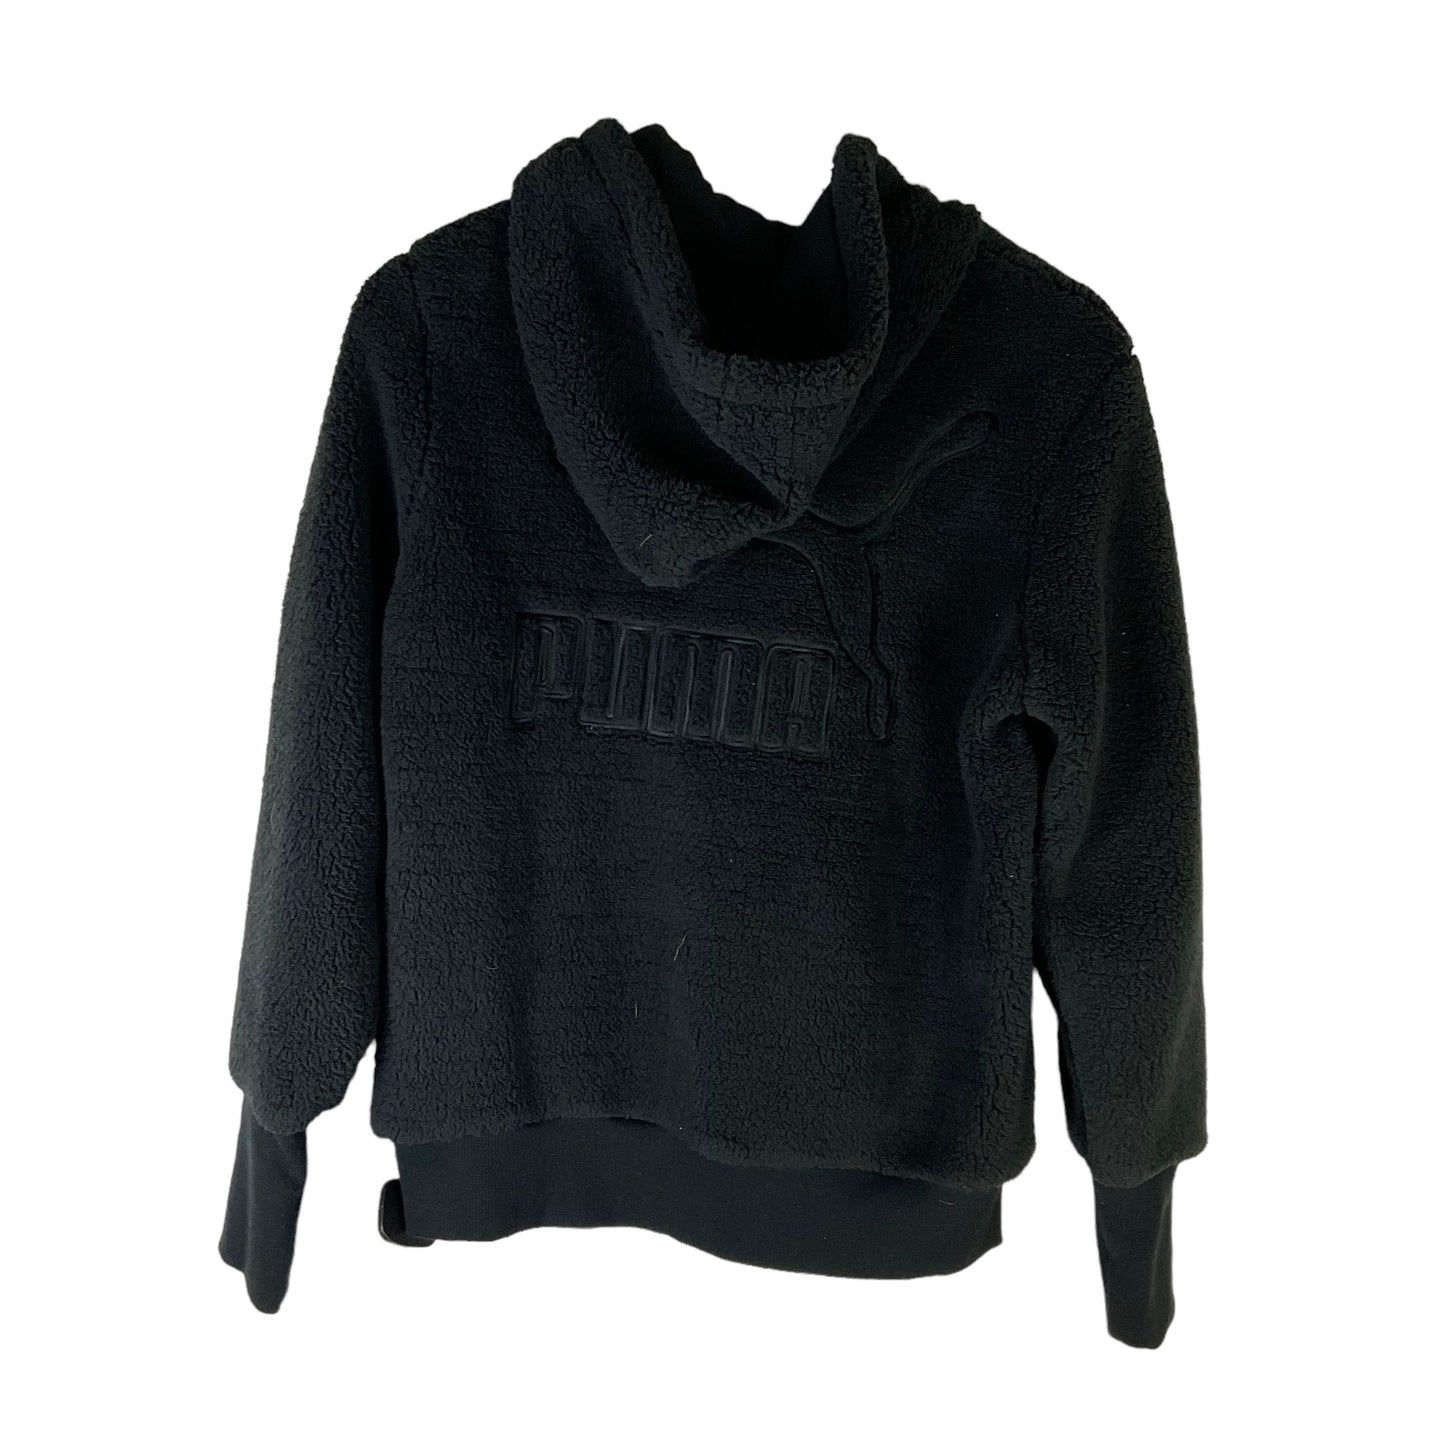 Sweatshirt Hoodie By Puma  Size: M